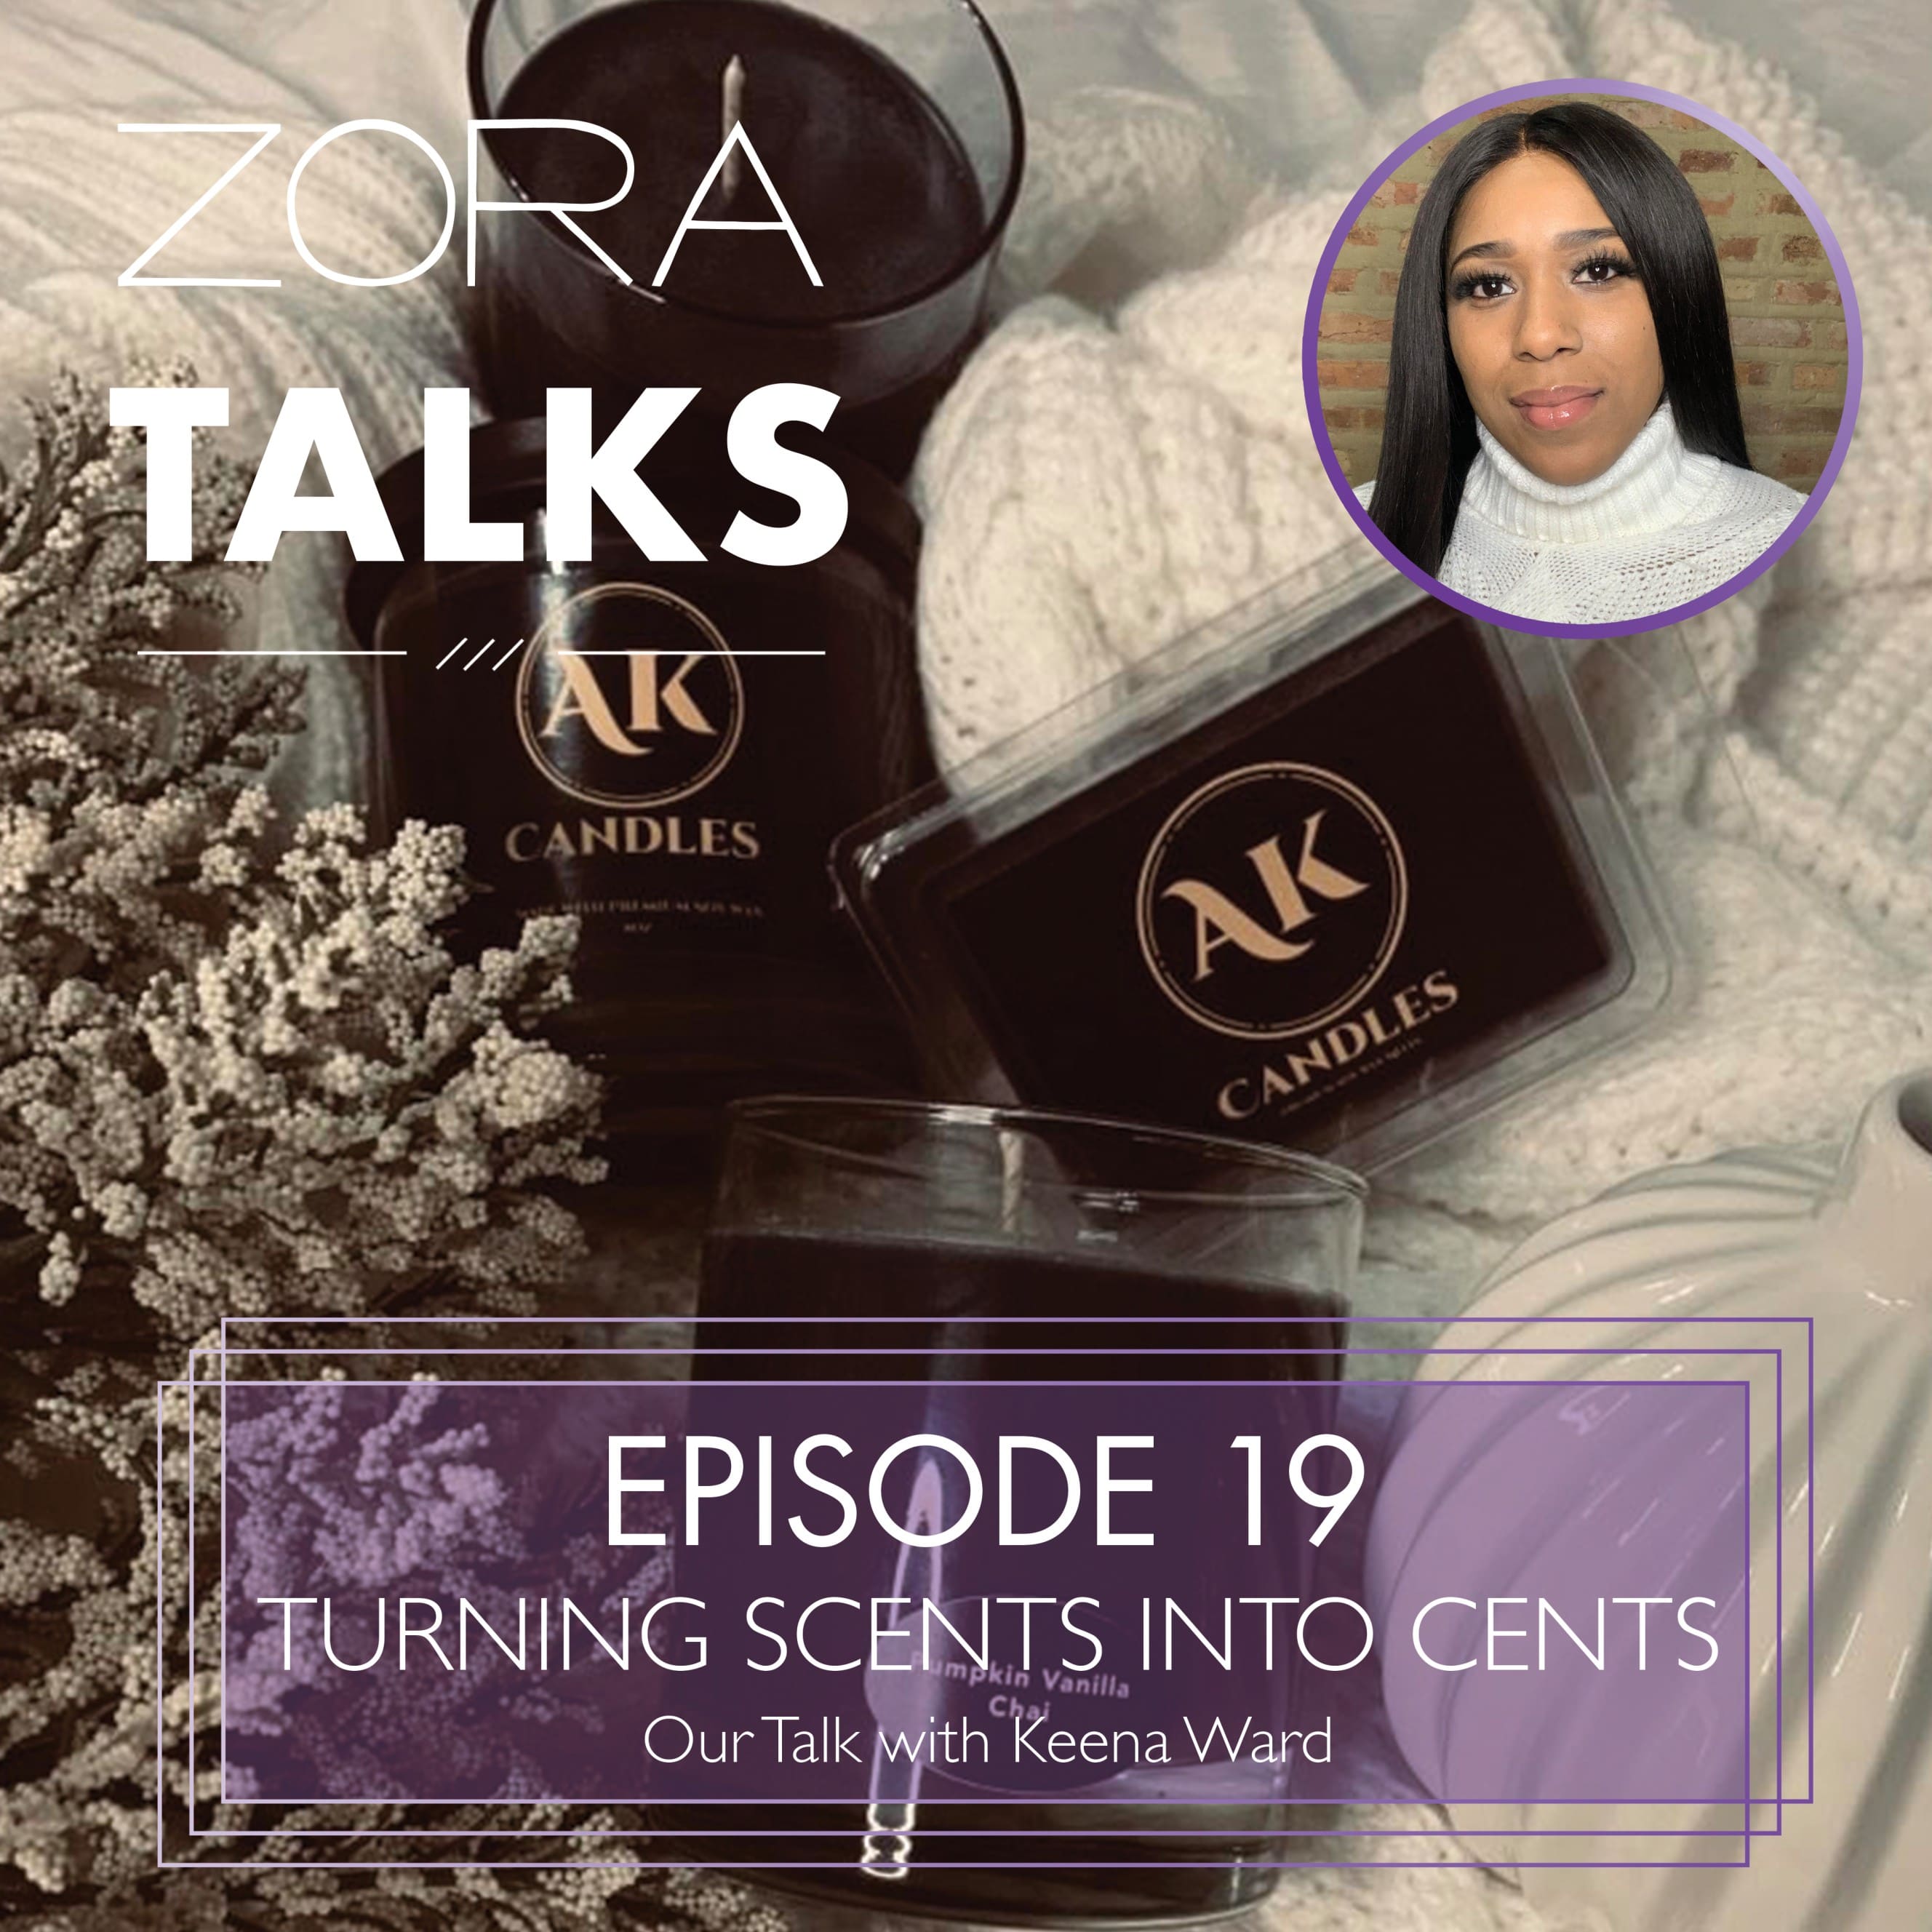 Zora Talks podcast episode 19 - AK Candles